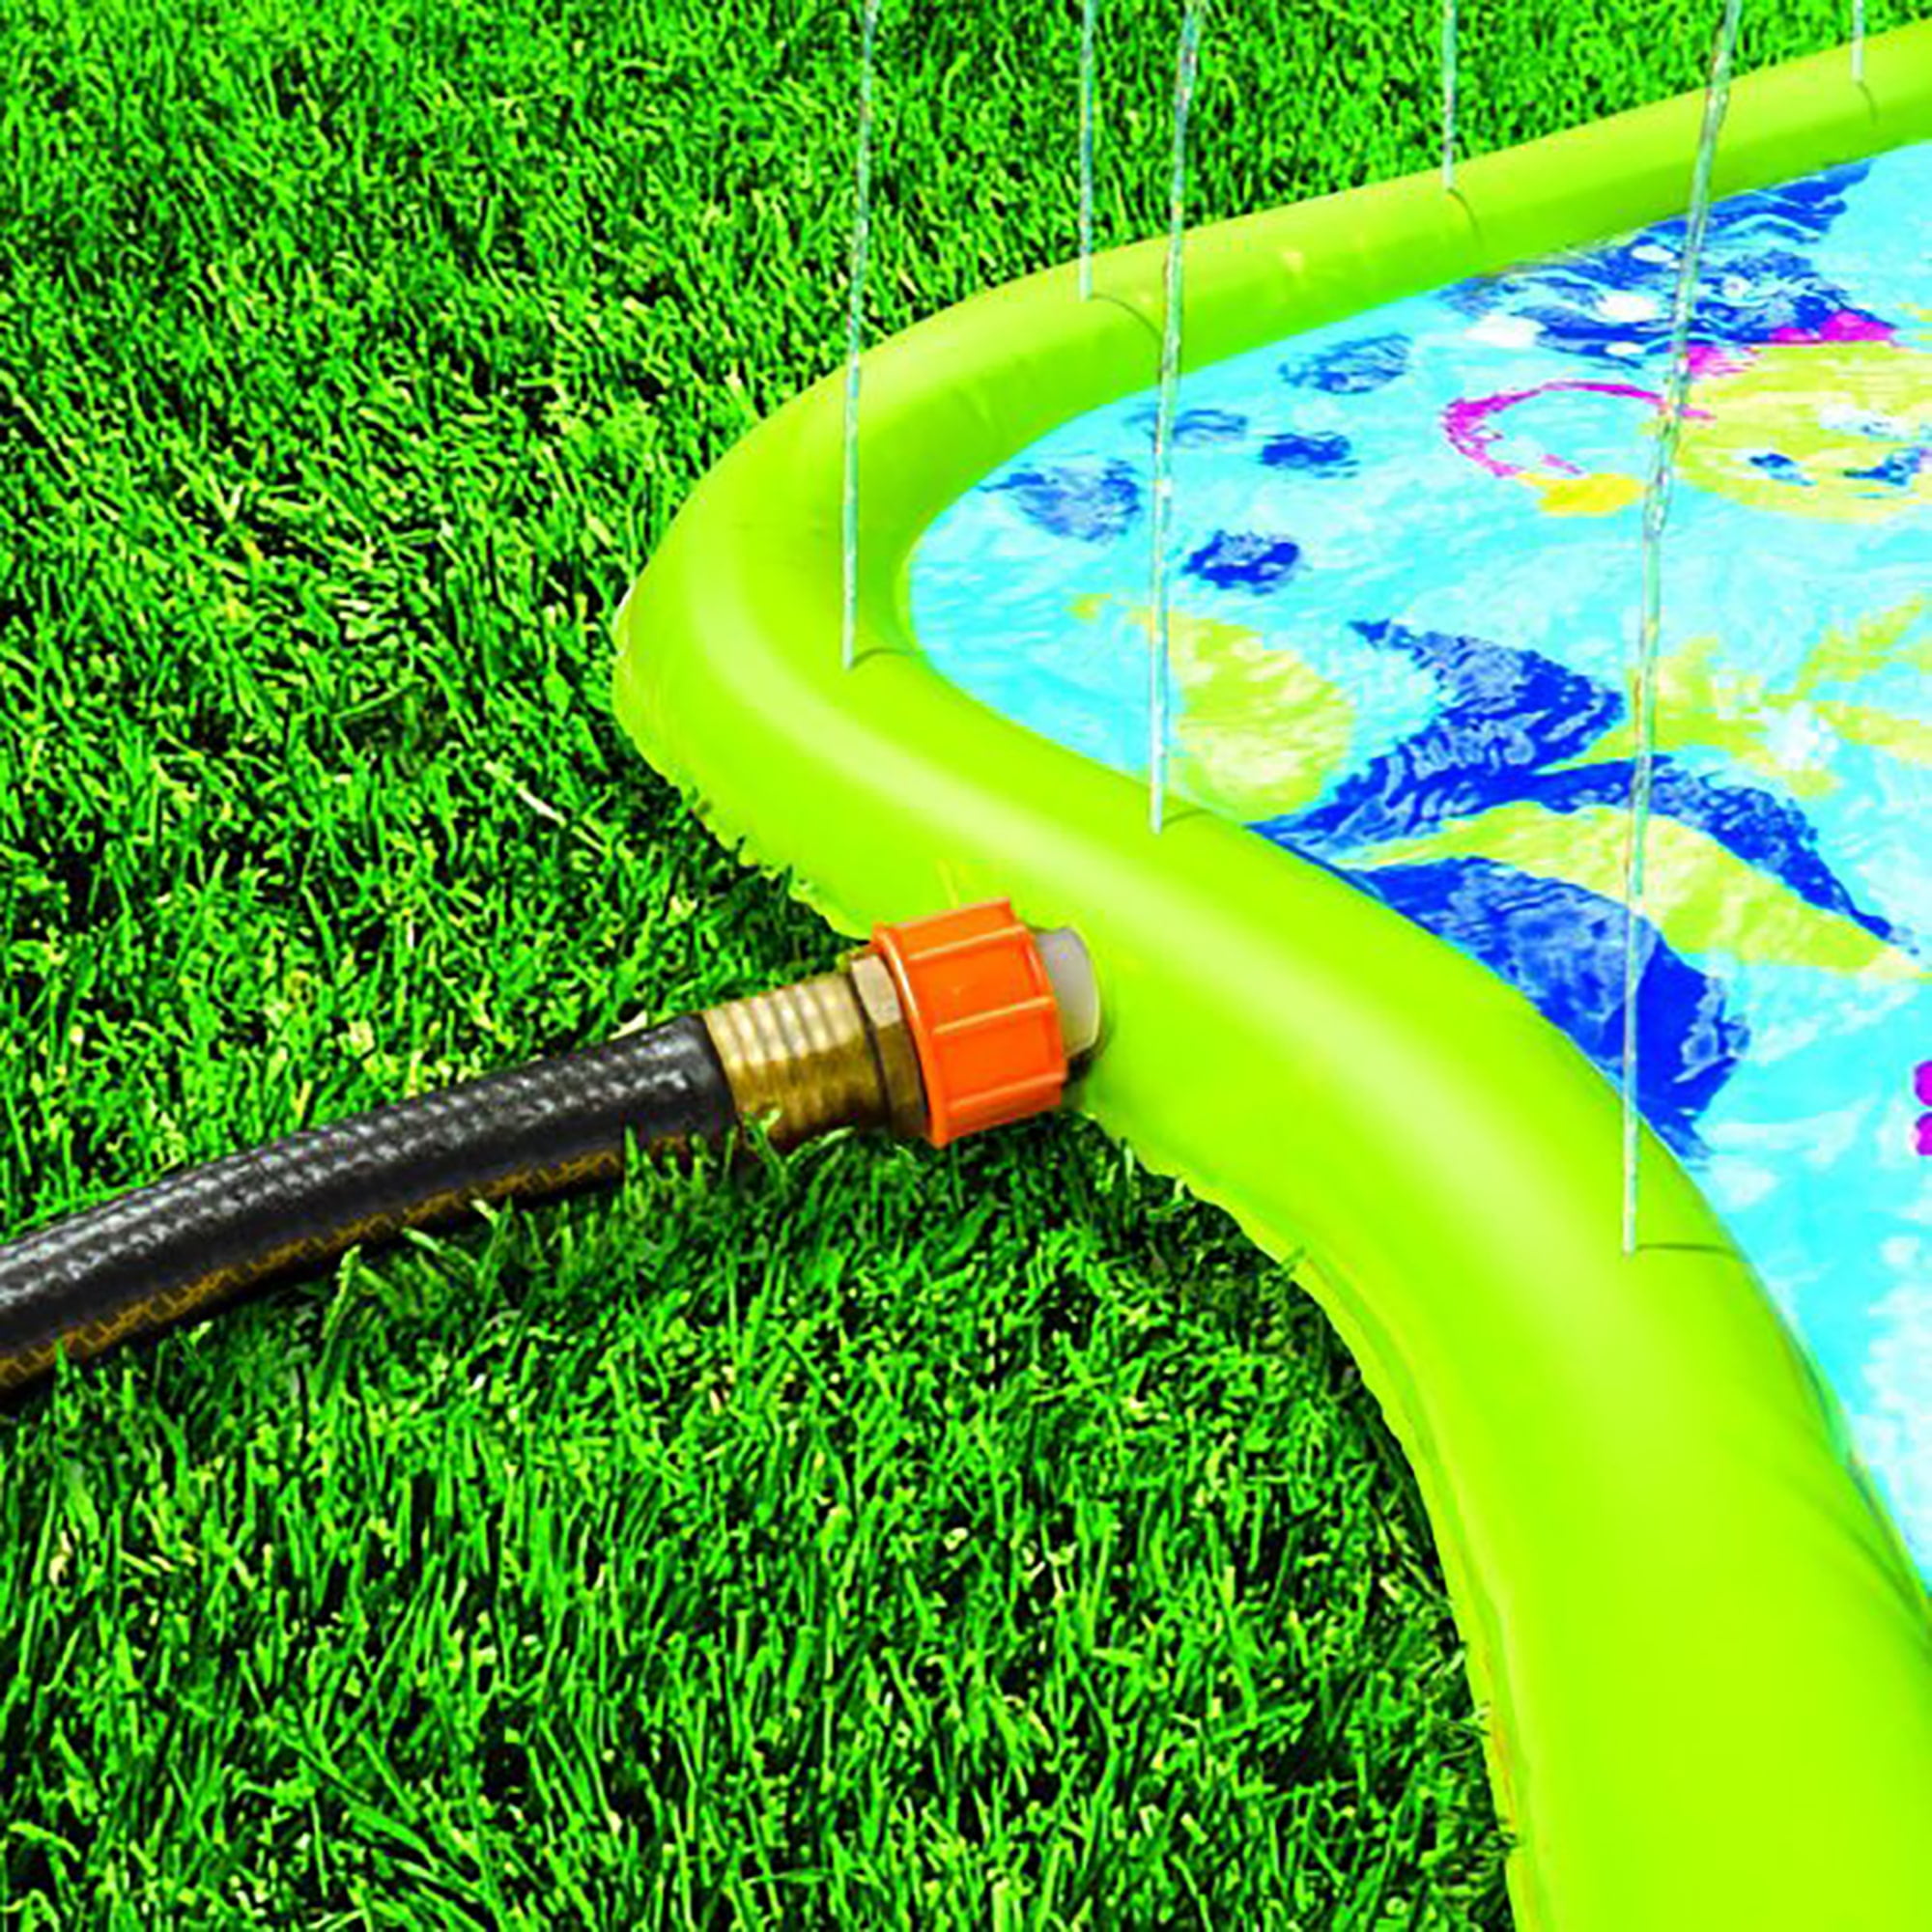 Banzai Splish Splash Water Park JR, Length: 90 in, Width: 52 in, Height: 24  in, Junior Inflatable Outdoor Backyard Water Splash Toy